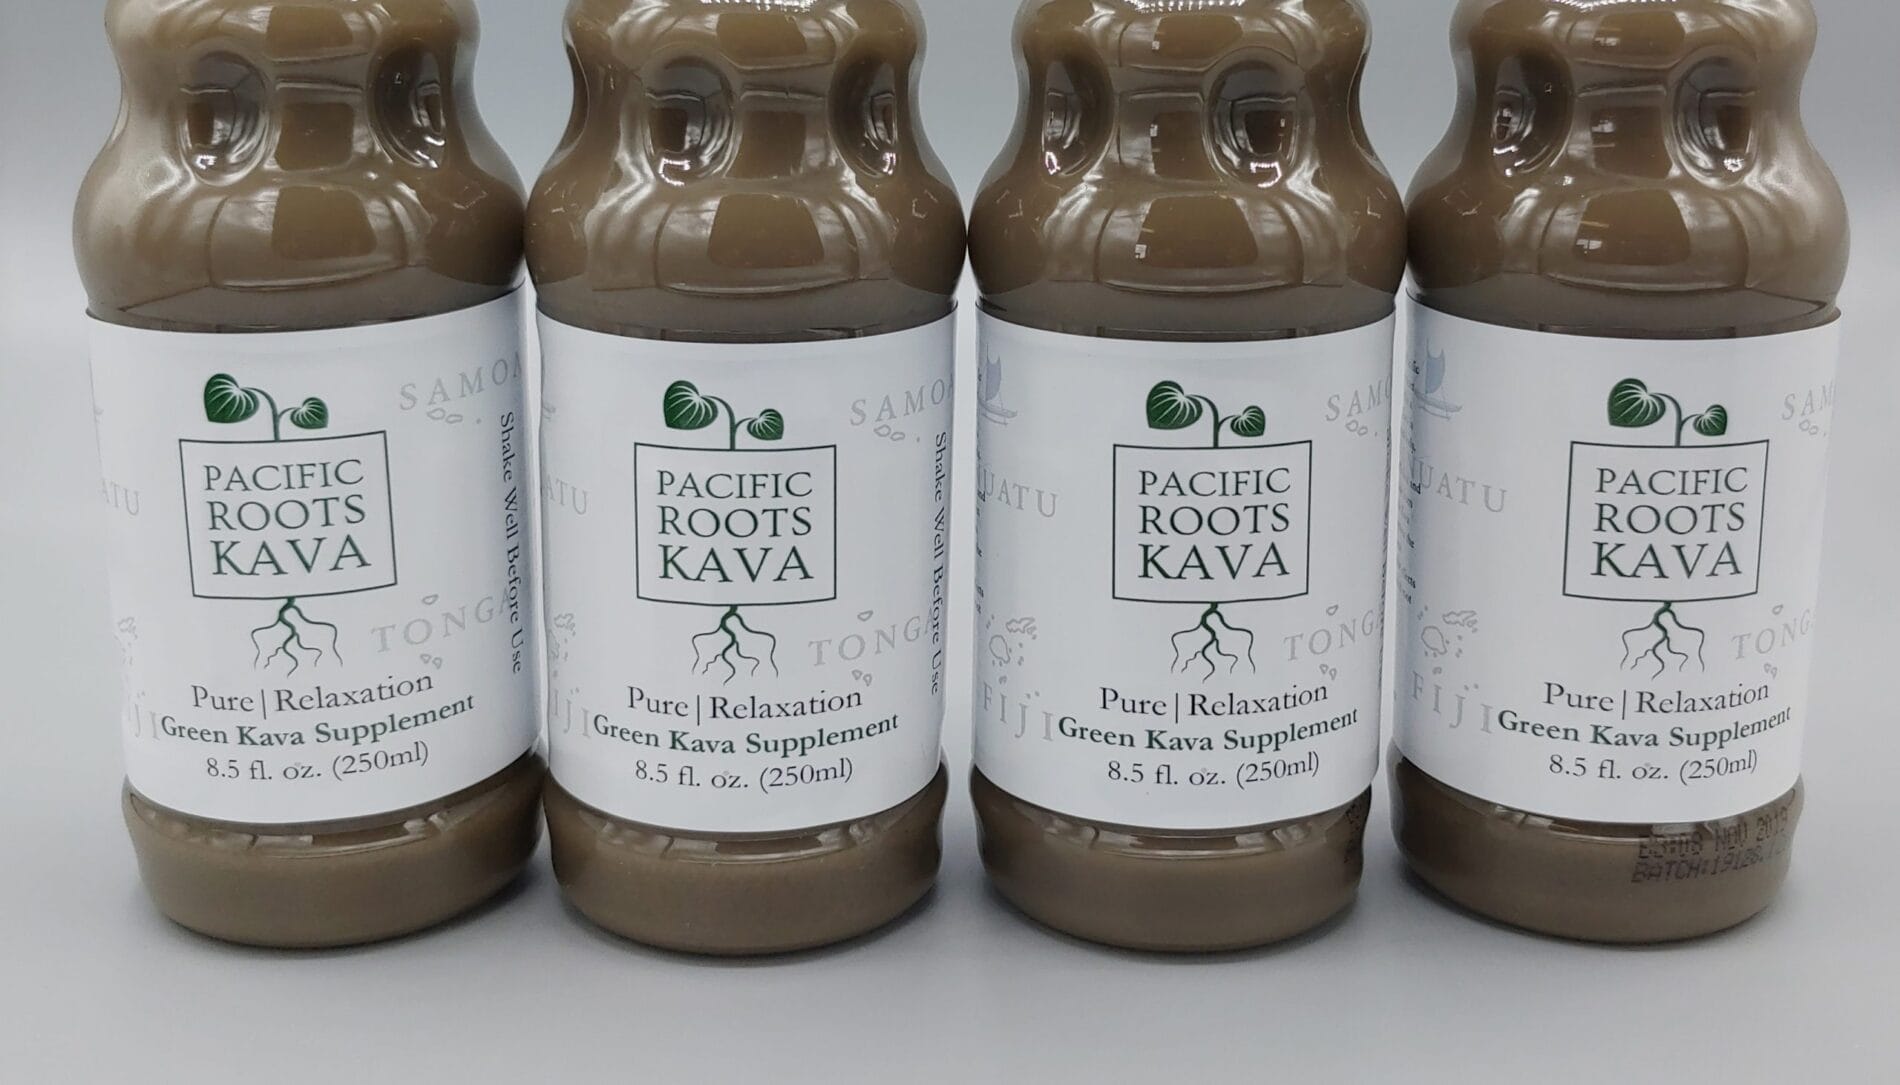 Pacific Roots Kava Bottles Website